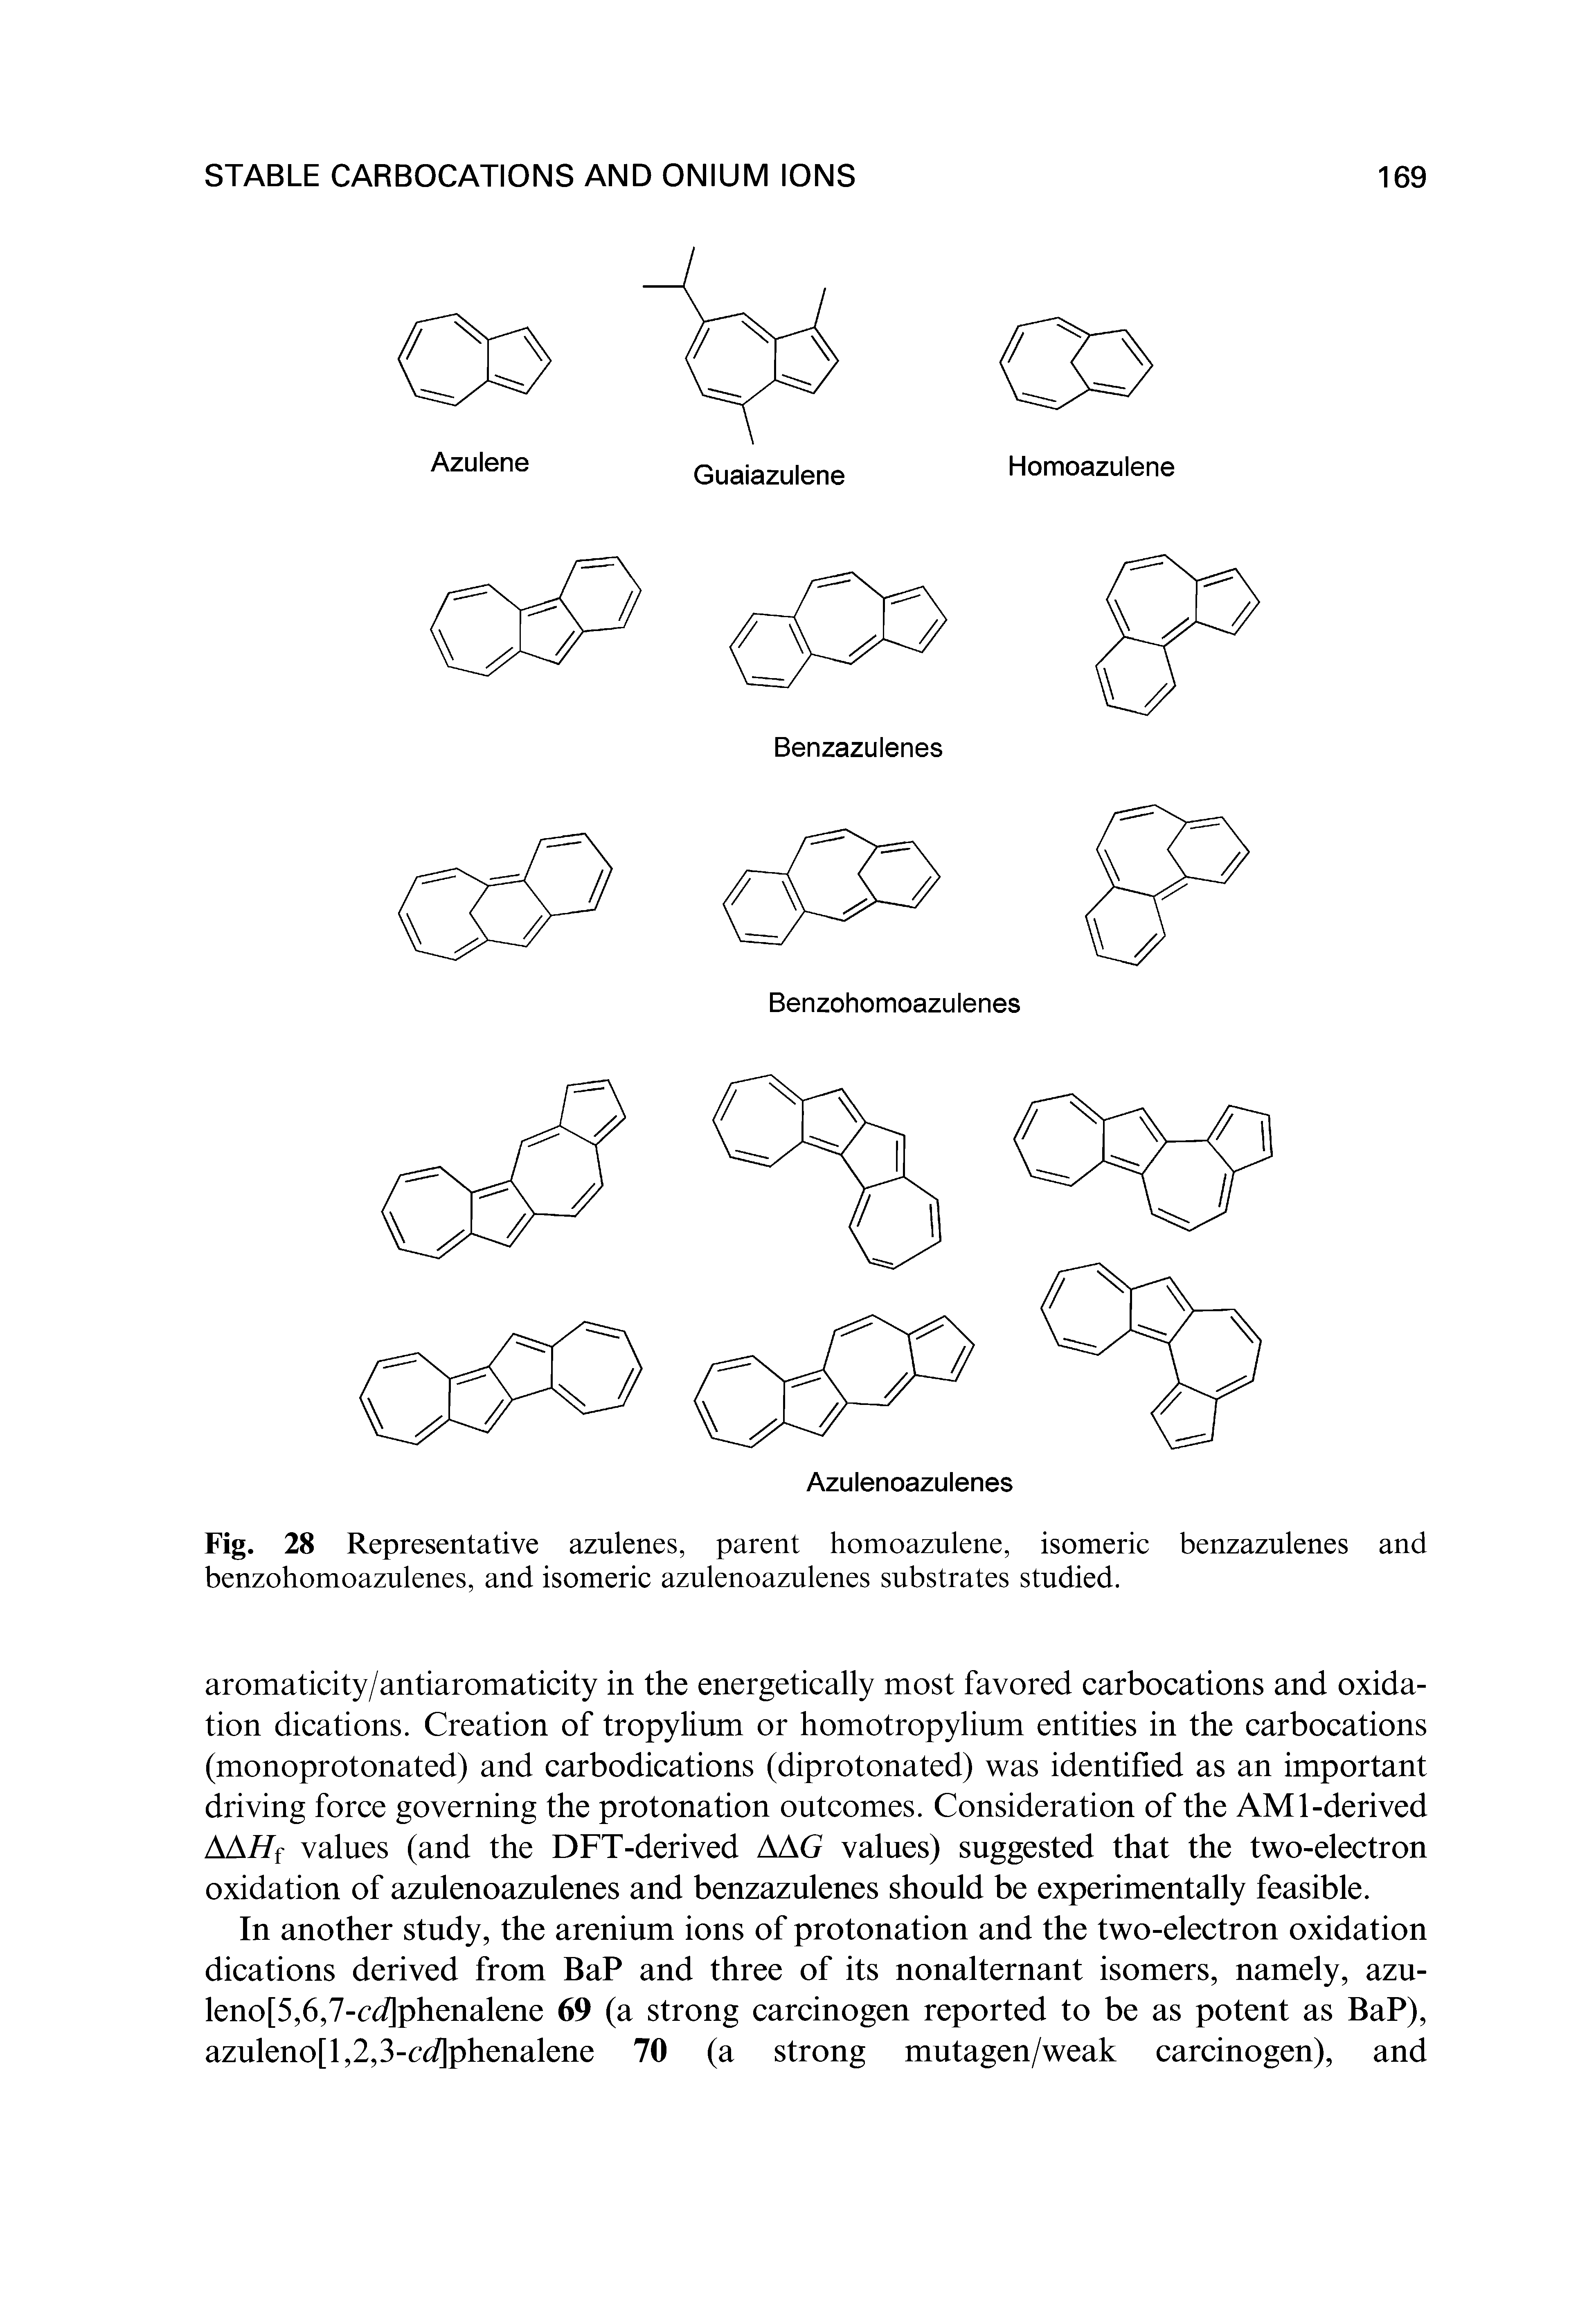 Fig. 28 Representative aznlenes, parent homoazulene, isomeric benzazulenes and benzohomoazulenes, and isomeric azulenoazulenes substrates studied.